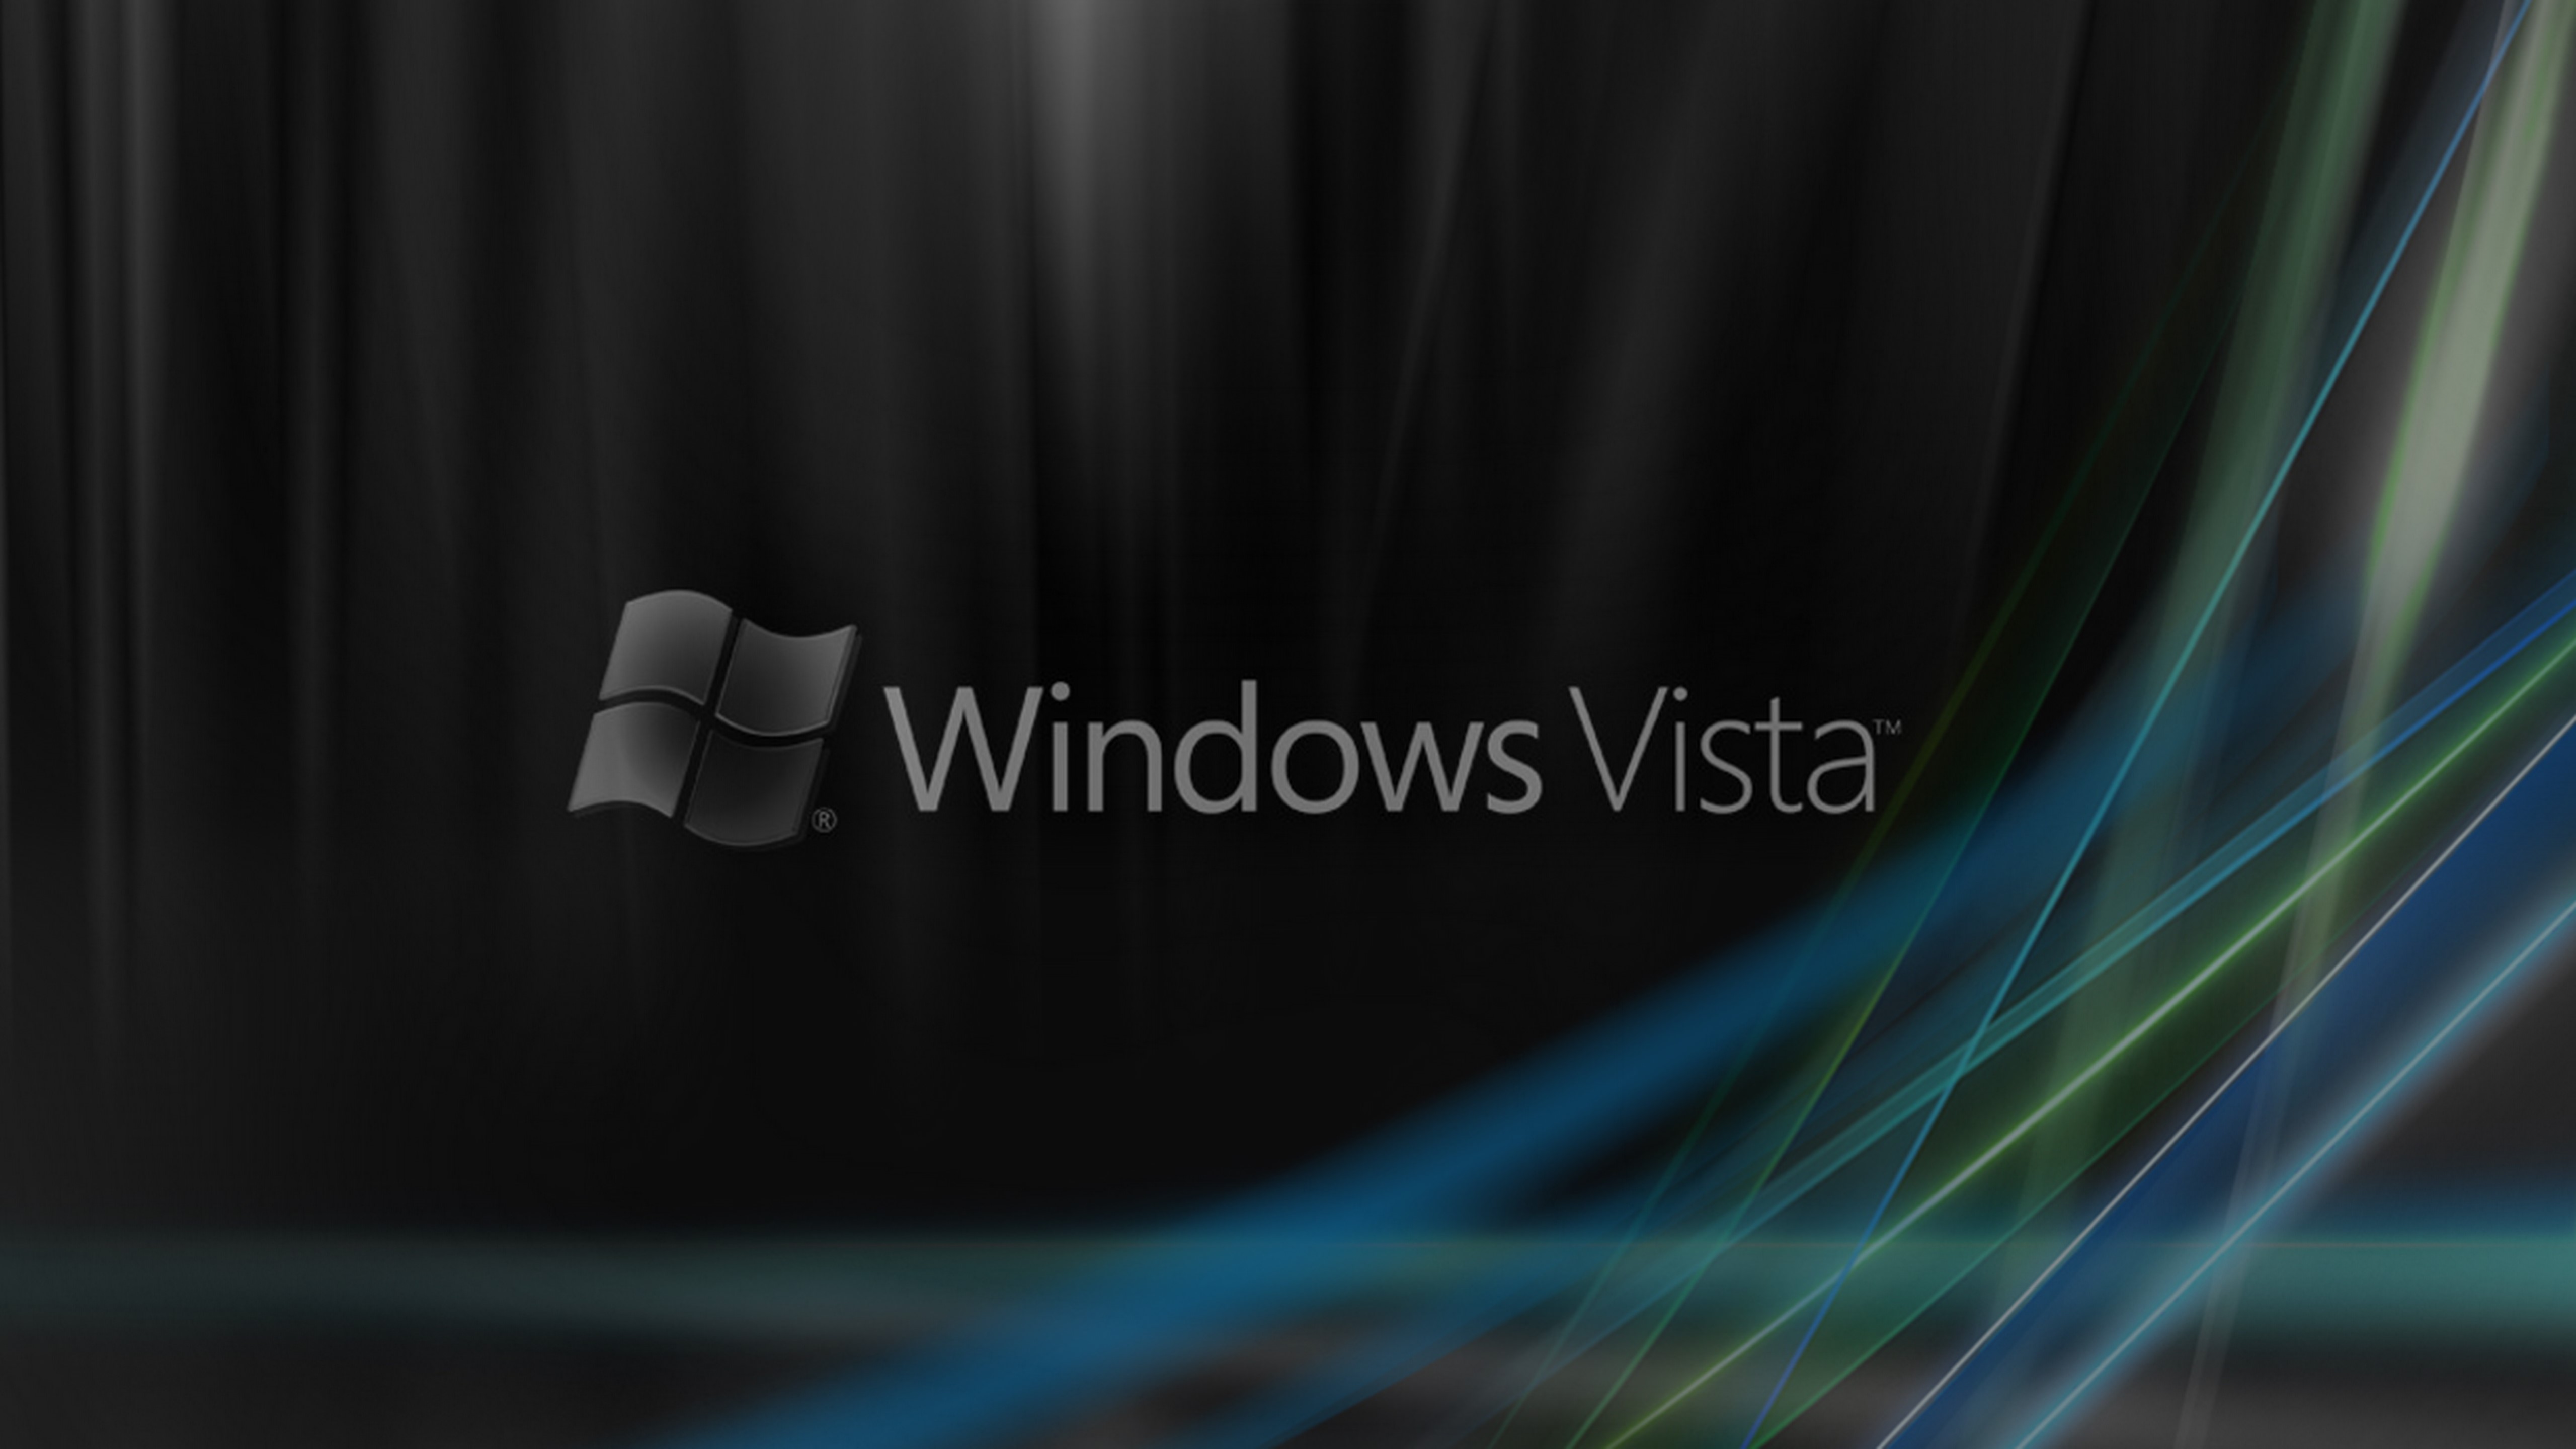 Windows Vista Ultimate Wallpaper